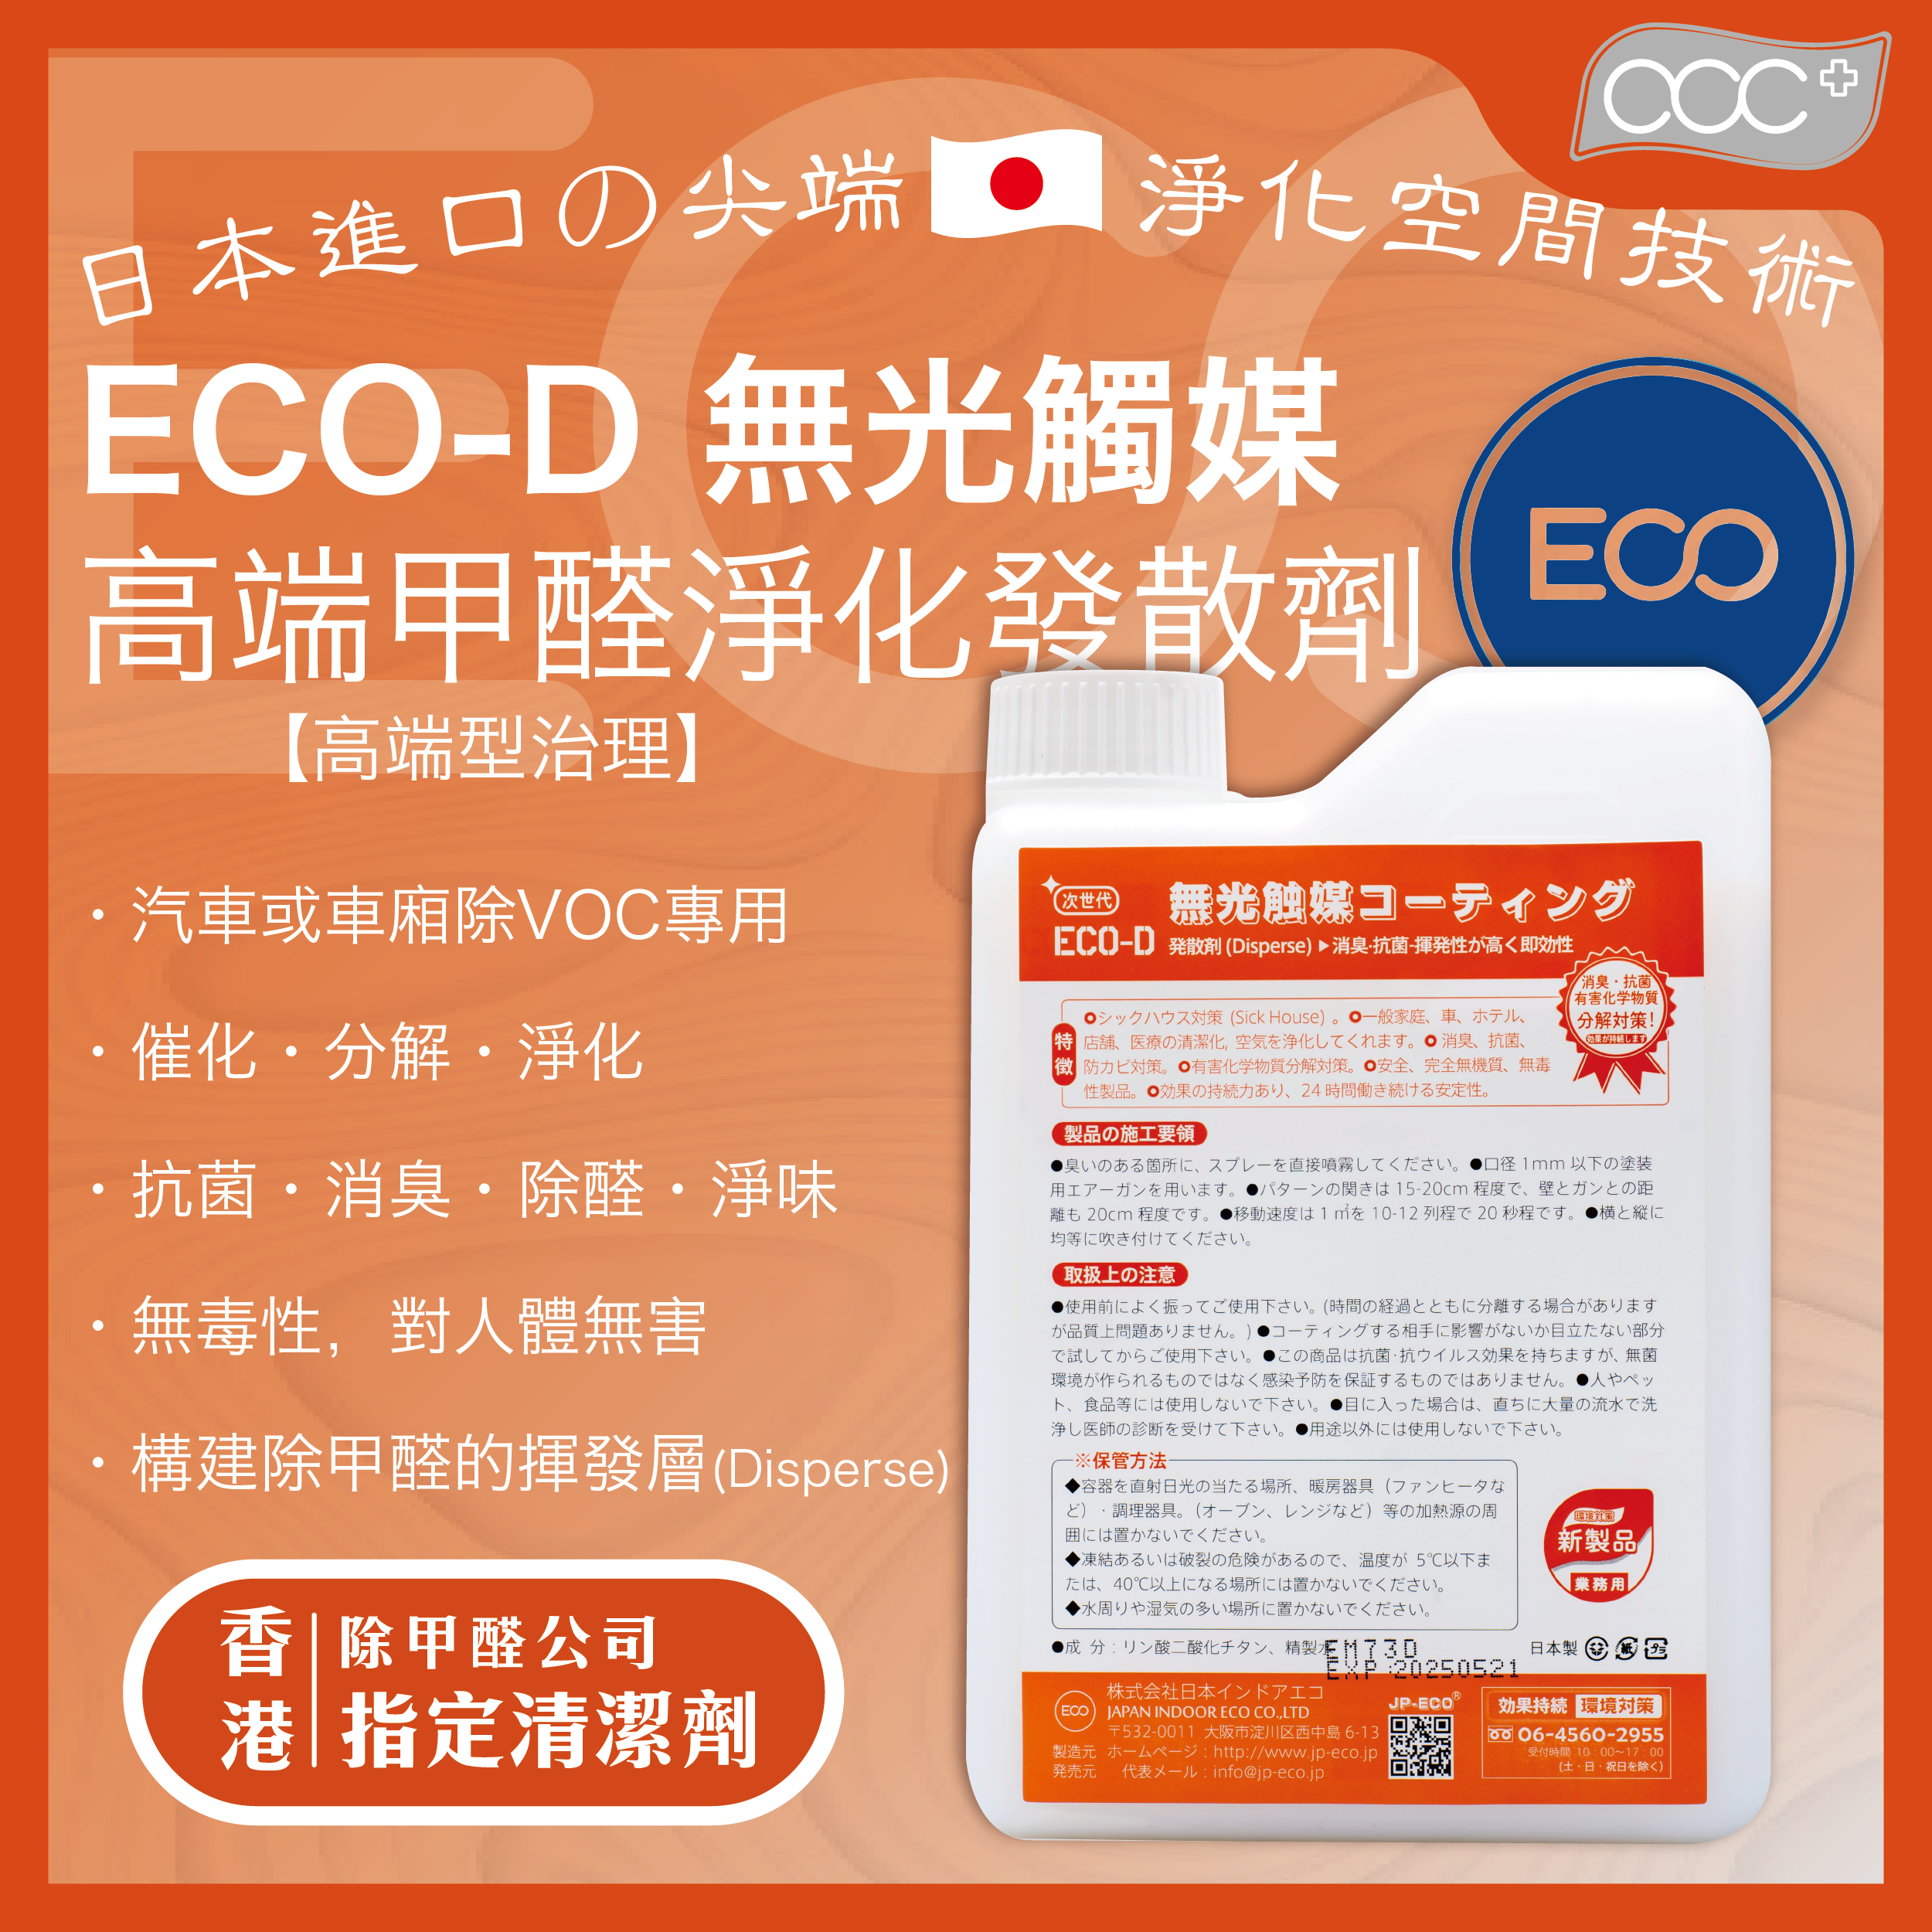 JP-ECO [Japanese original] ECO-D non-photocatalyst diffuser (1kg) formaldehyde scavenger powerful purification spray